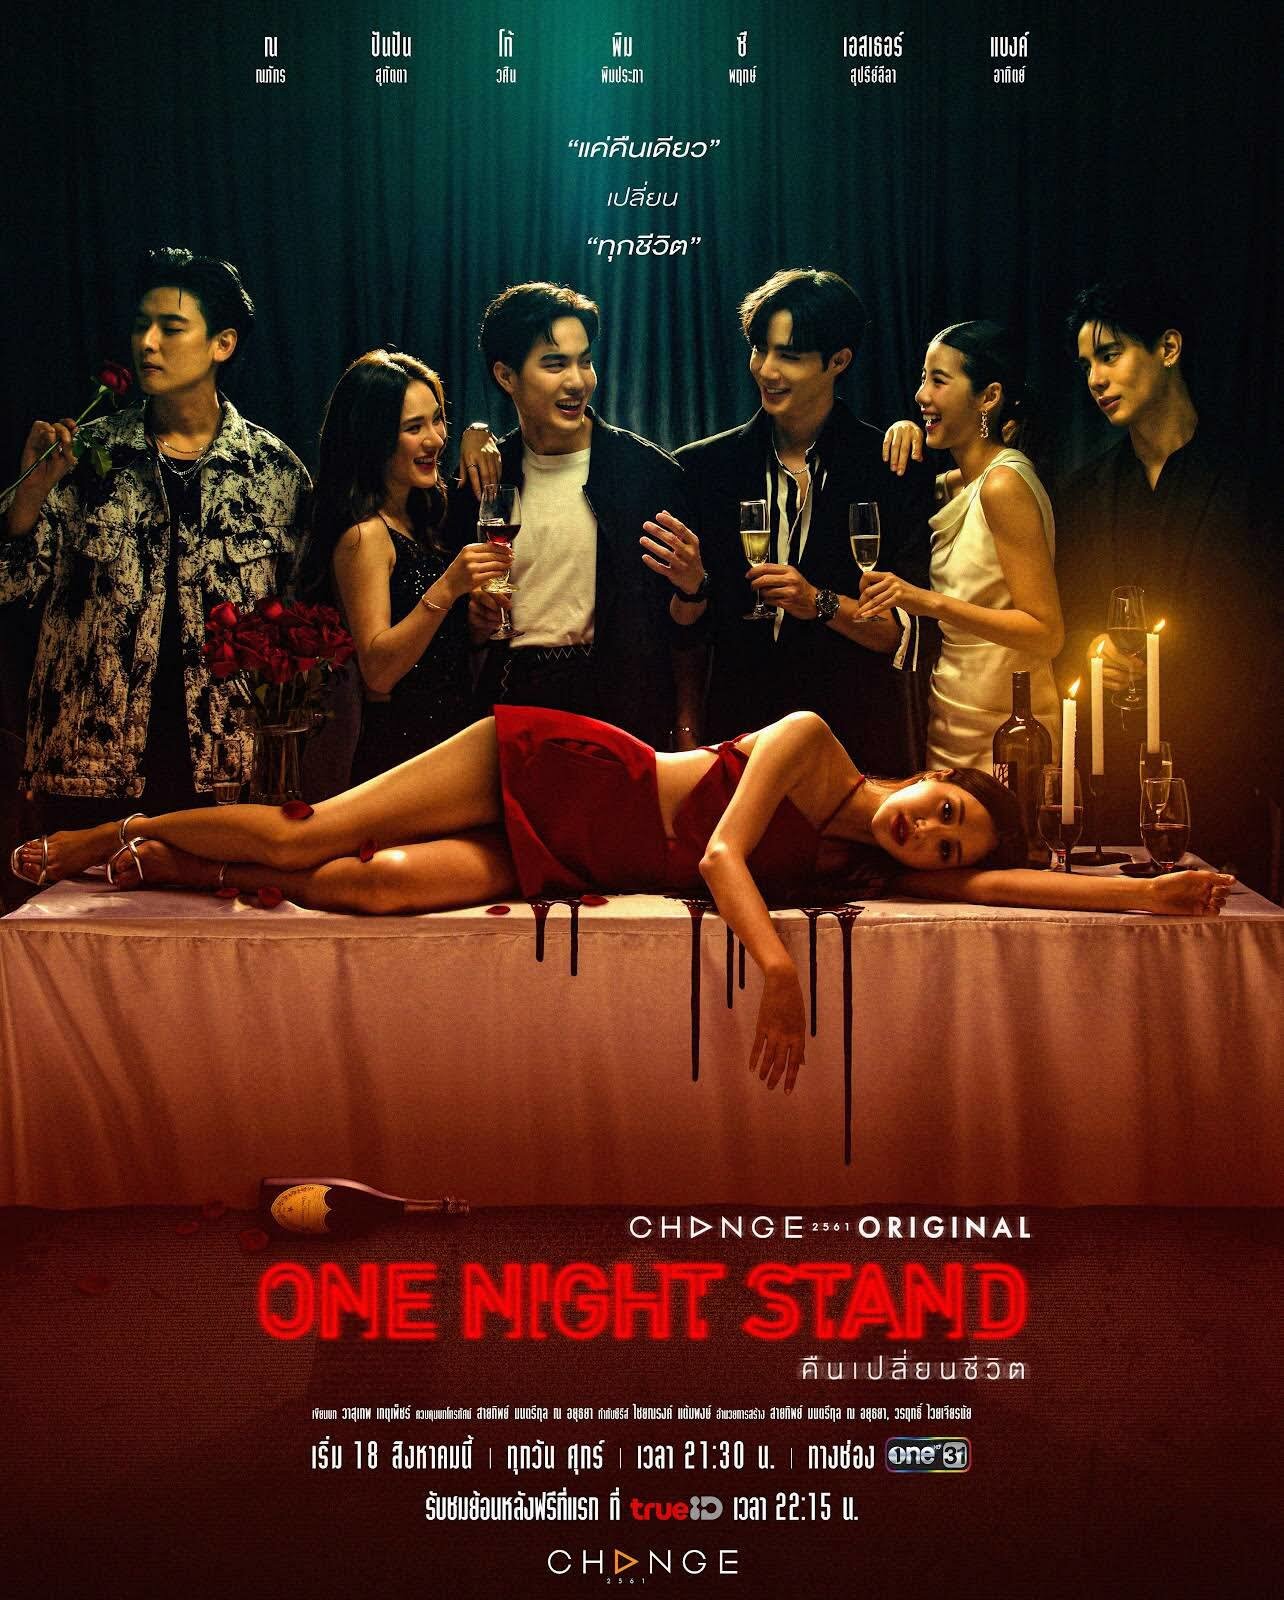 One Night Stand ne zaman